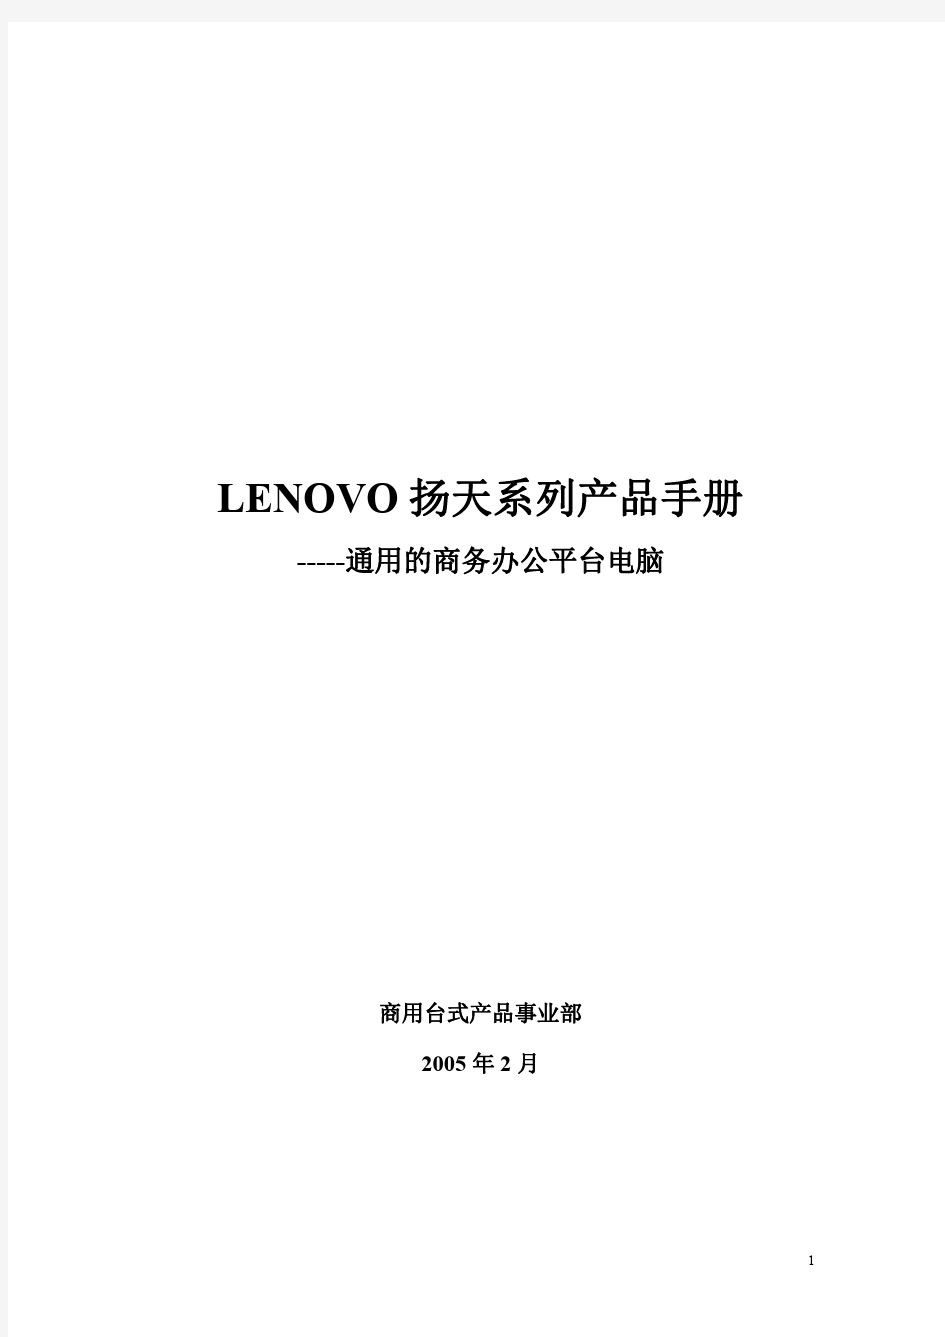 LENOVO扬天系列产品手册V1.0